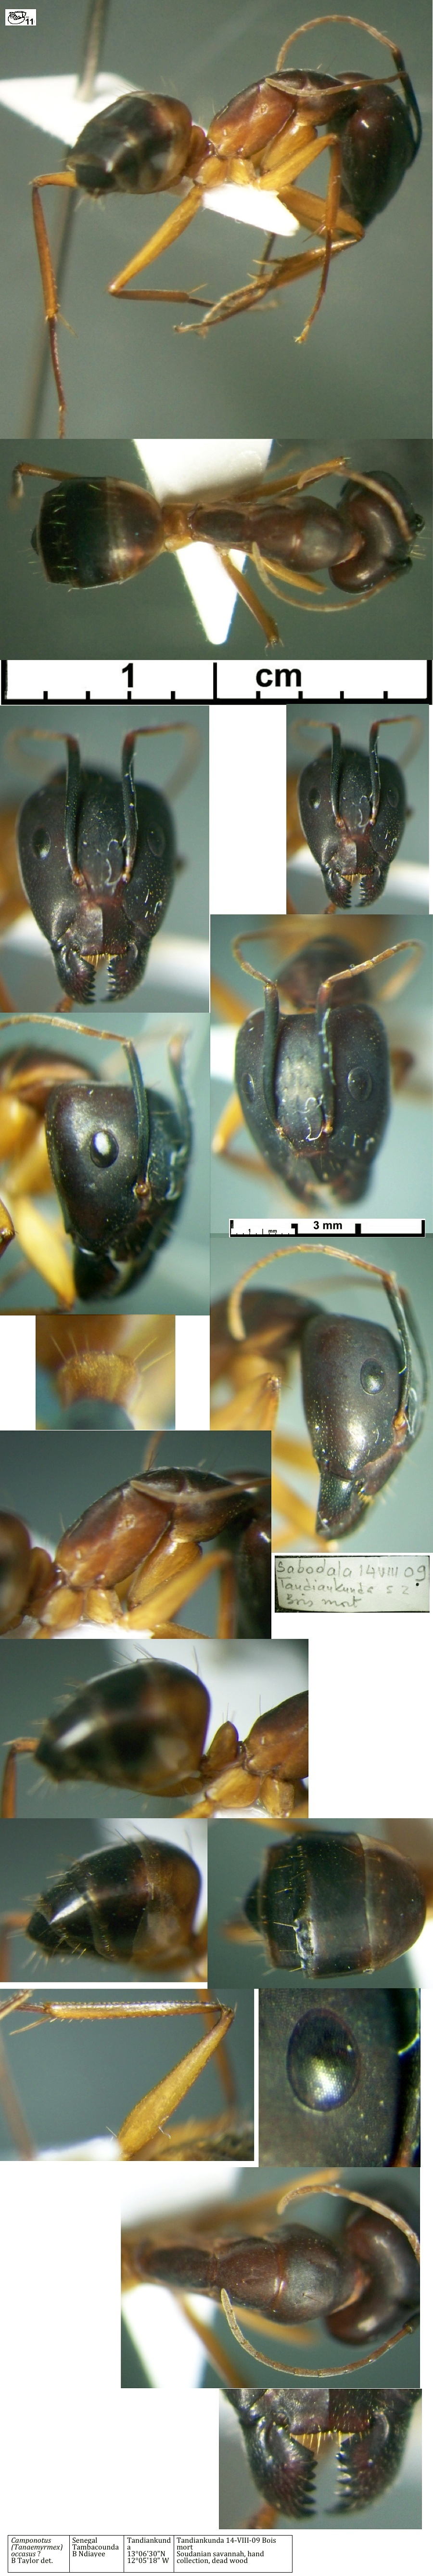 Camponotus (Tanemyrmex) occasus major